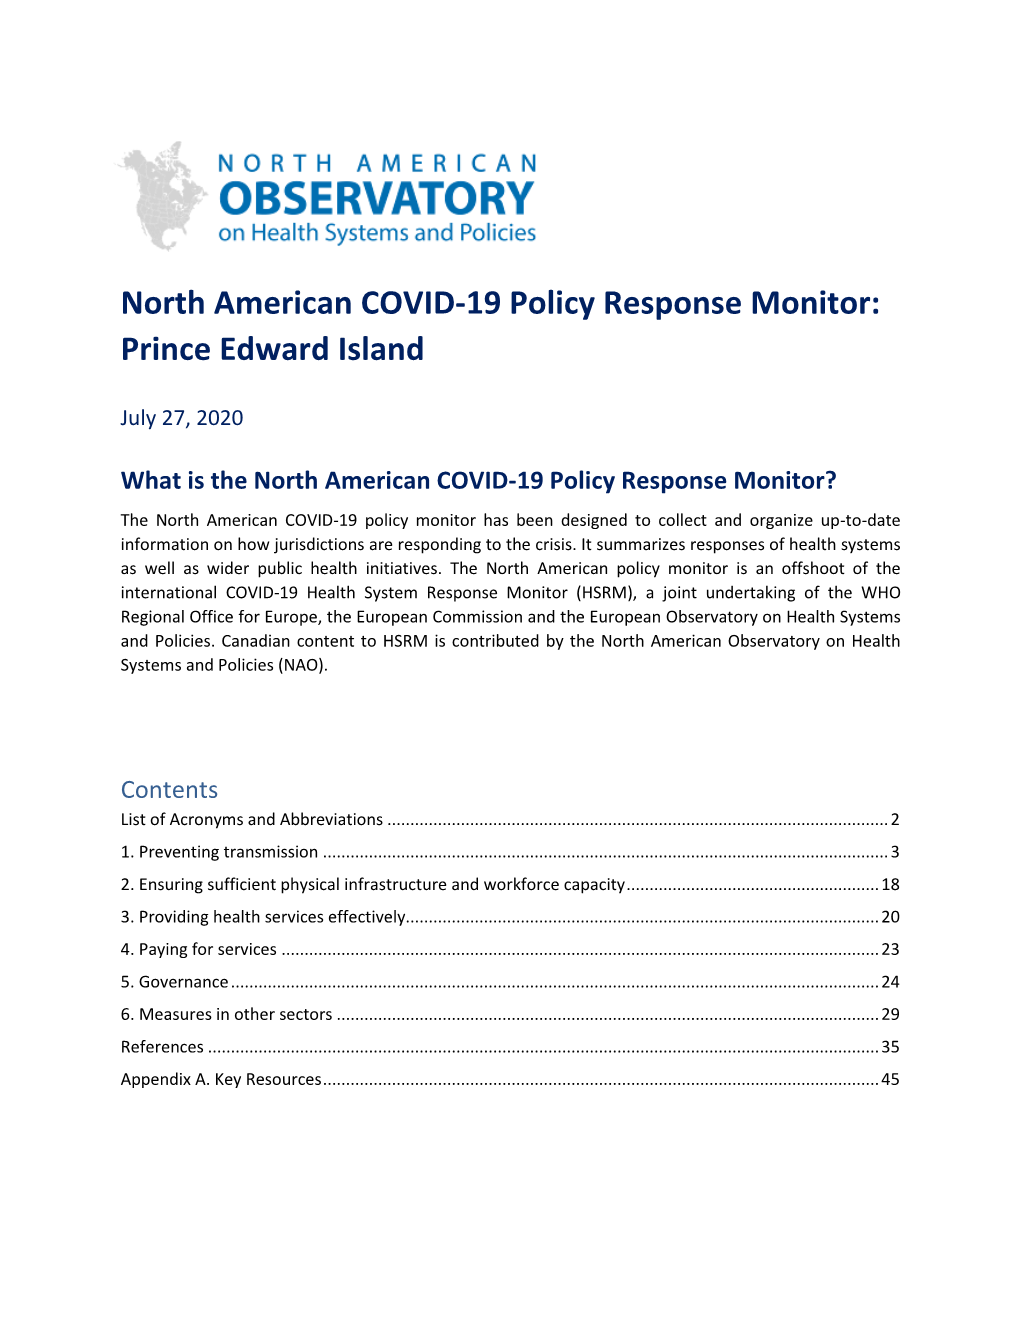 Prince Edward Island Response Monitor